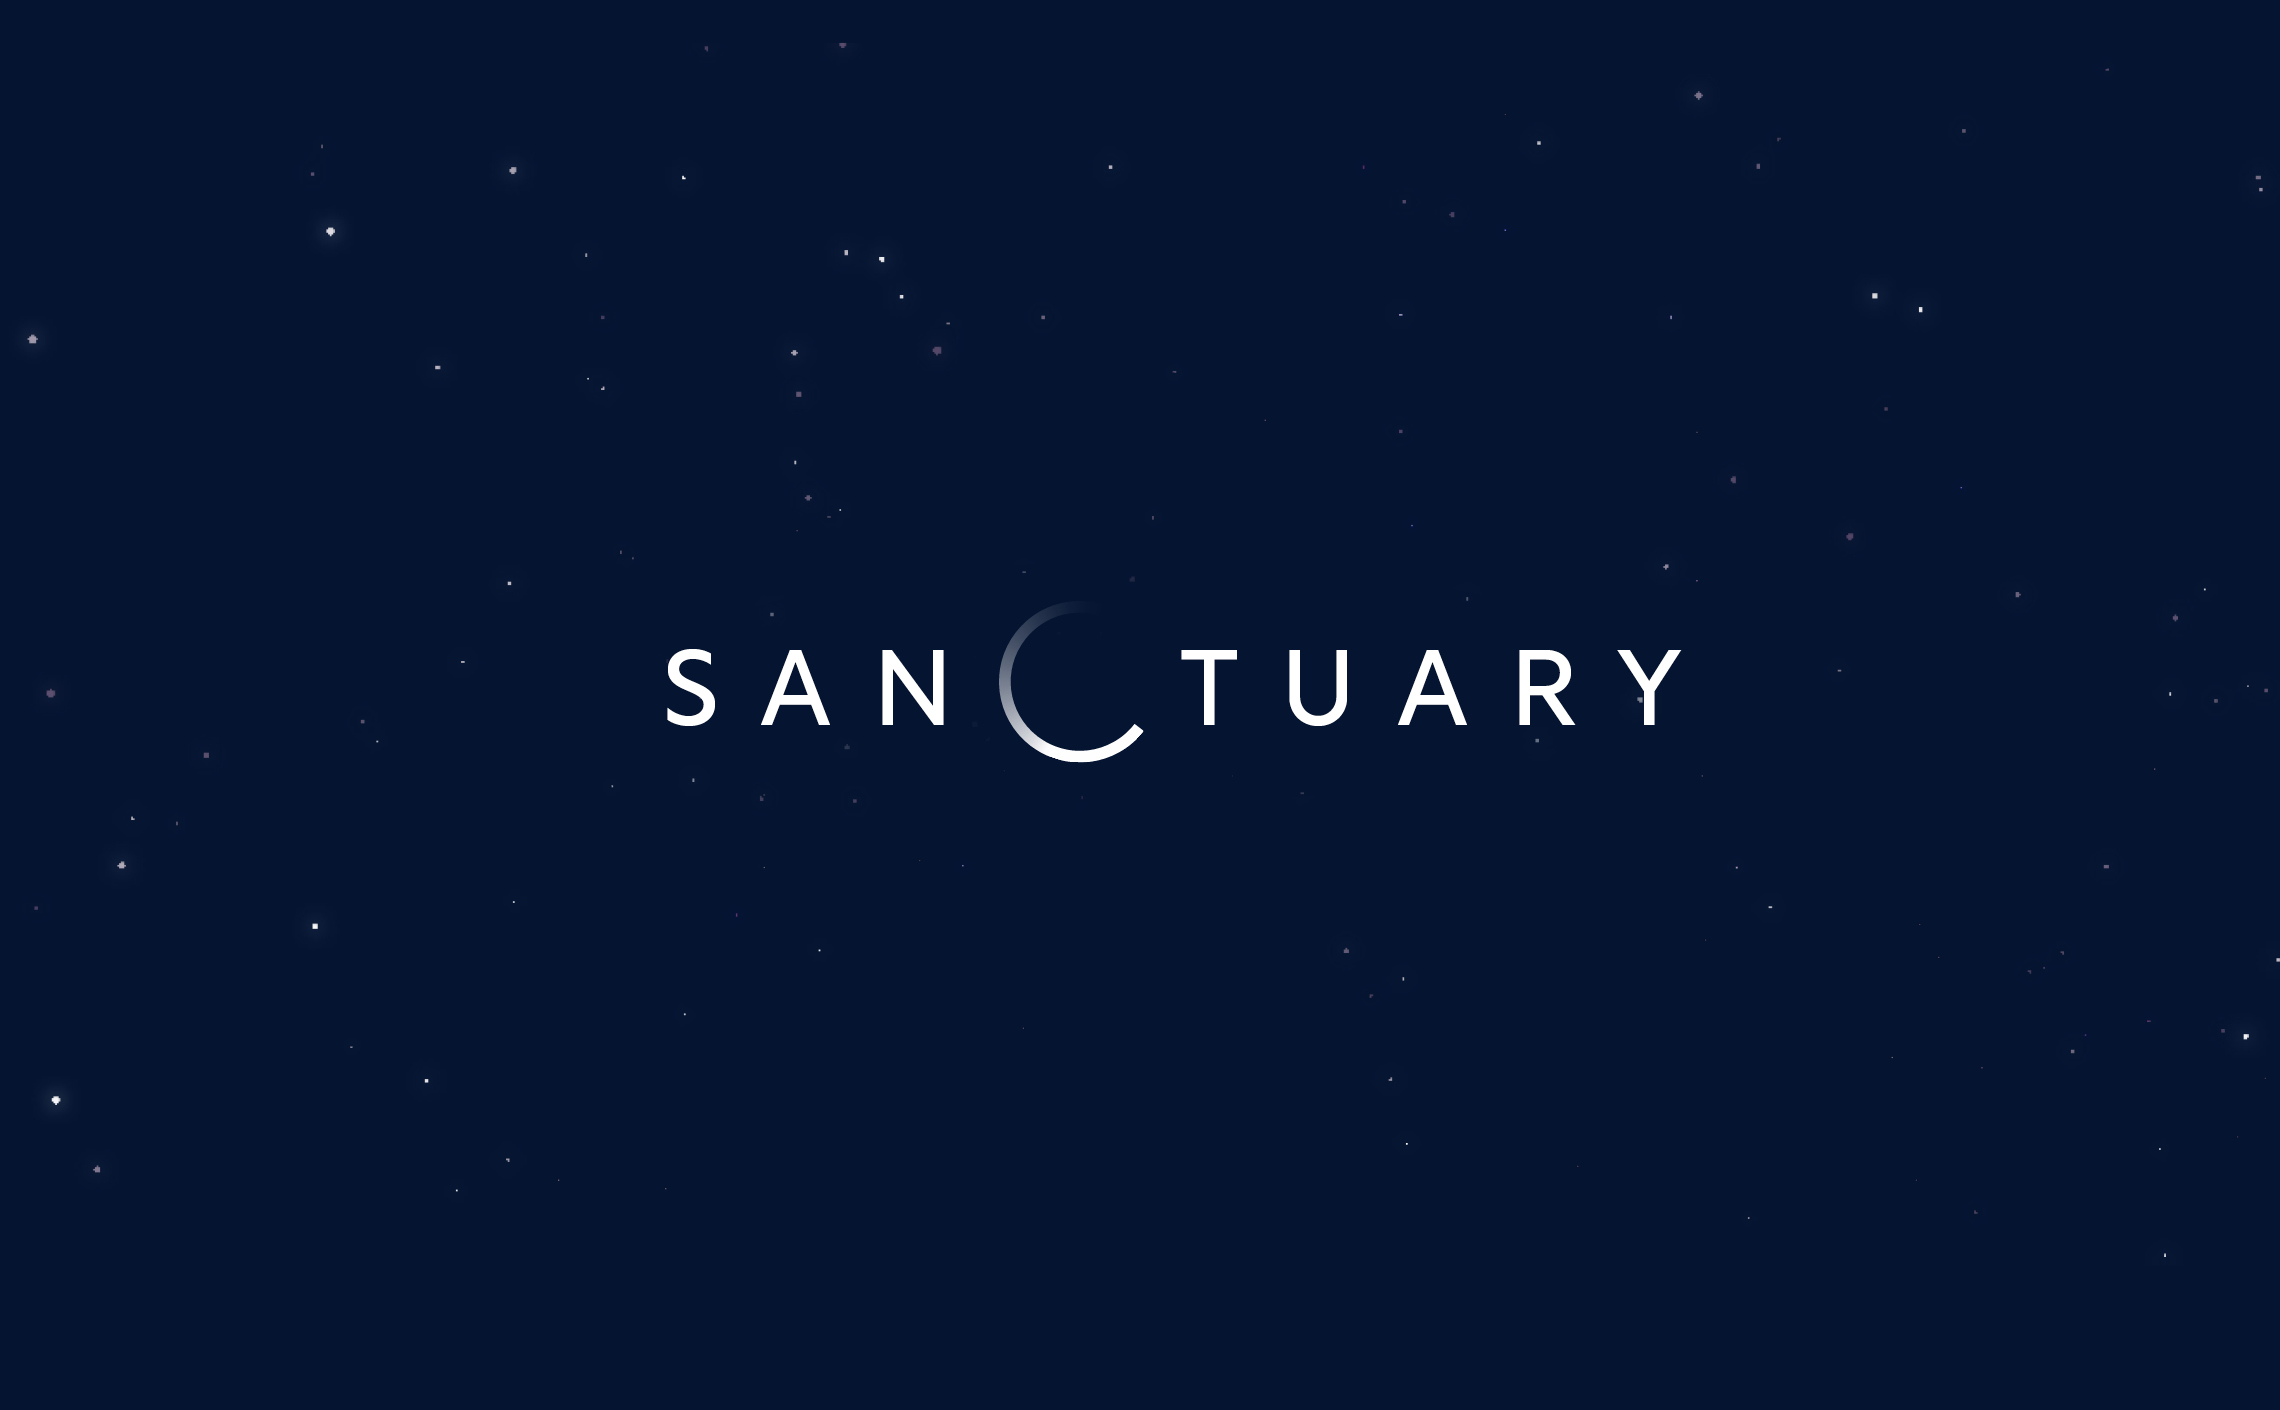 Sanctuary on the moon nasa branding logotype space